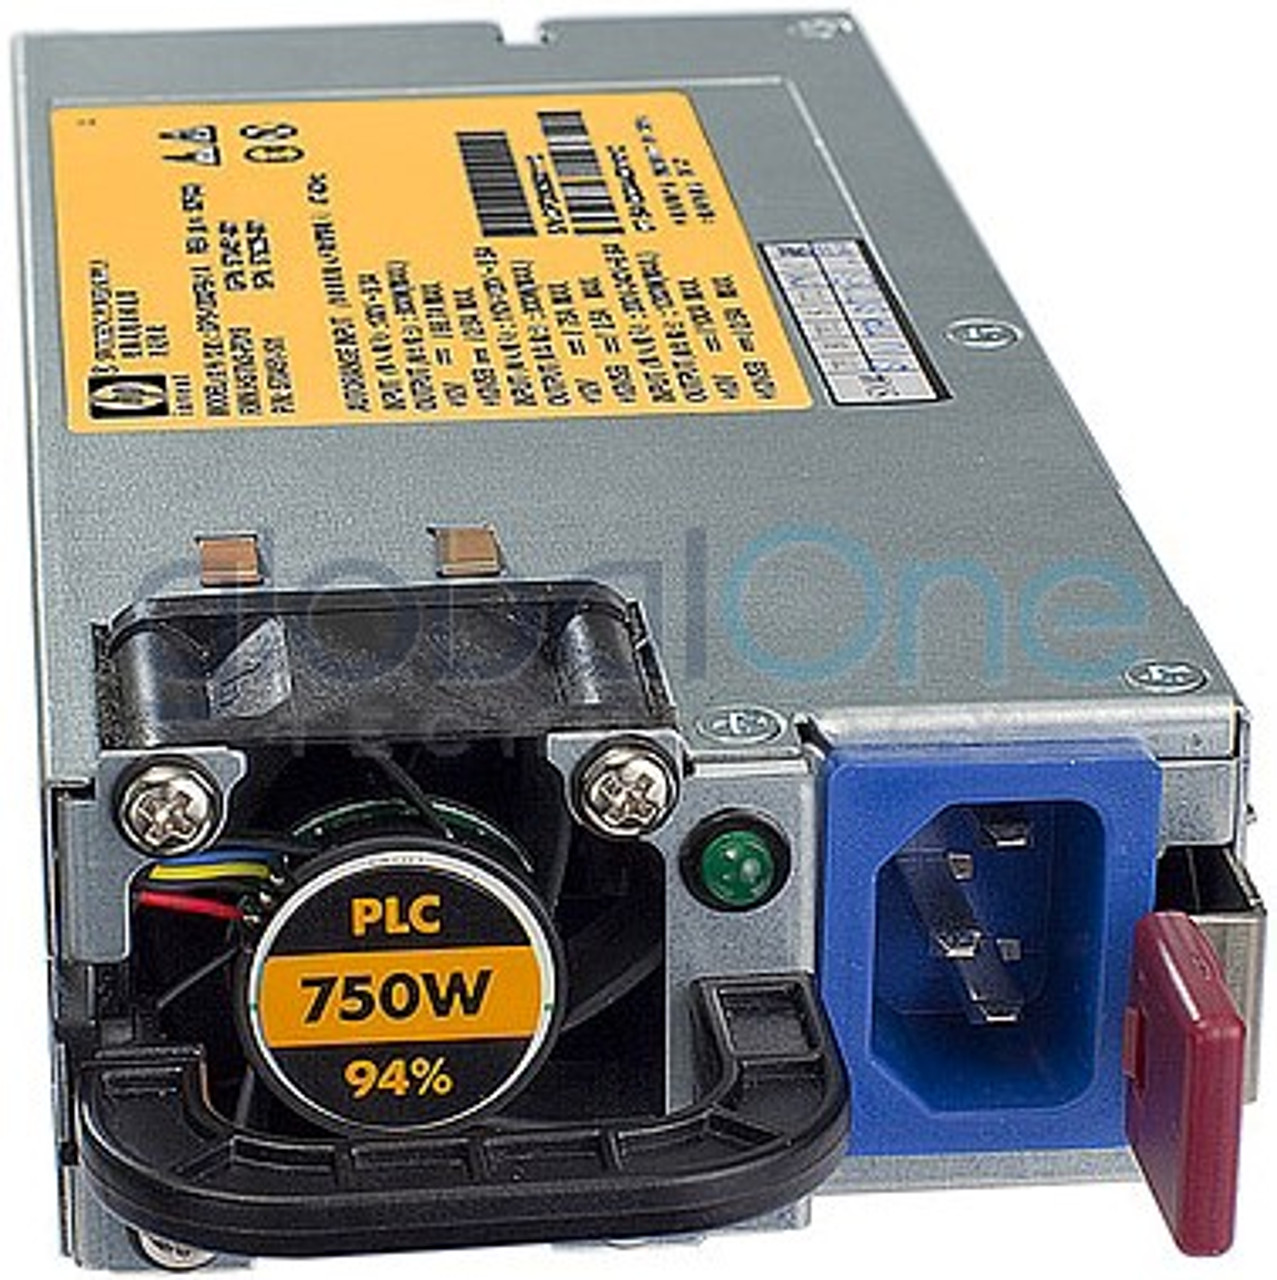 660183-001 HPE 750W Common Slot Platinum Plus Hot Plug Power Supply Kit  (HPE Option #: 656363-B21)